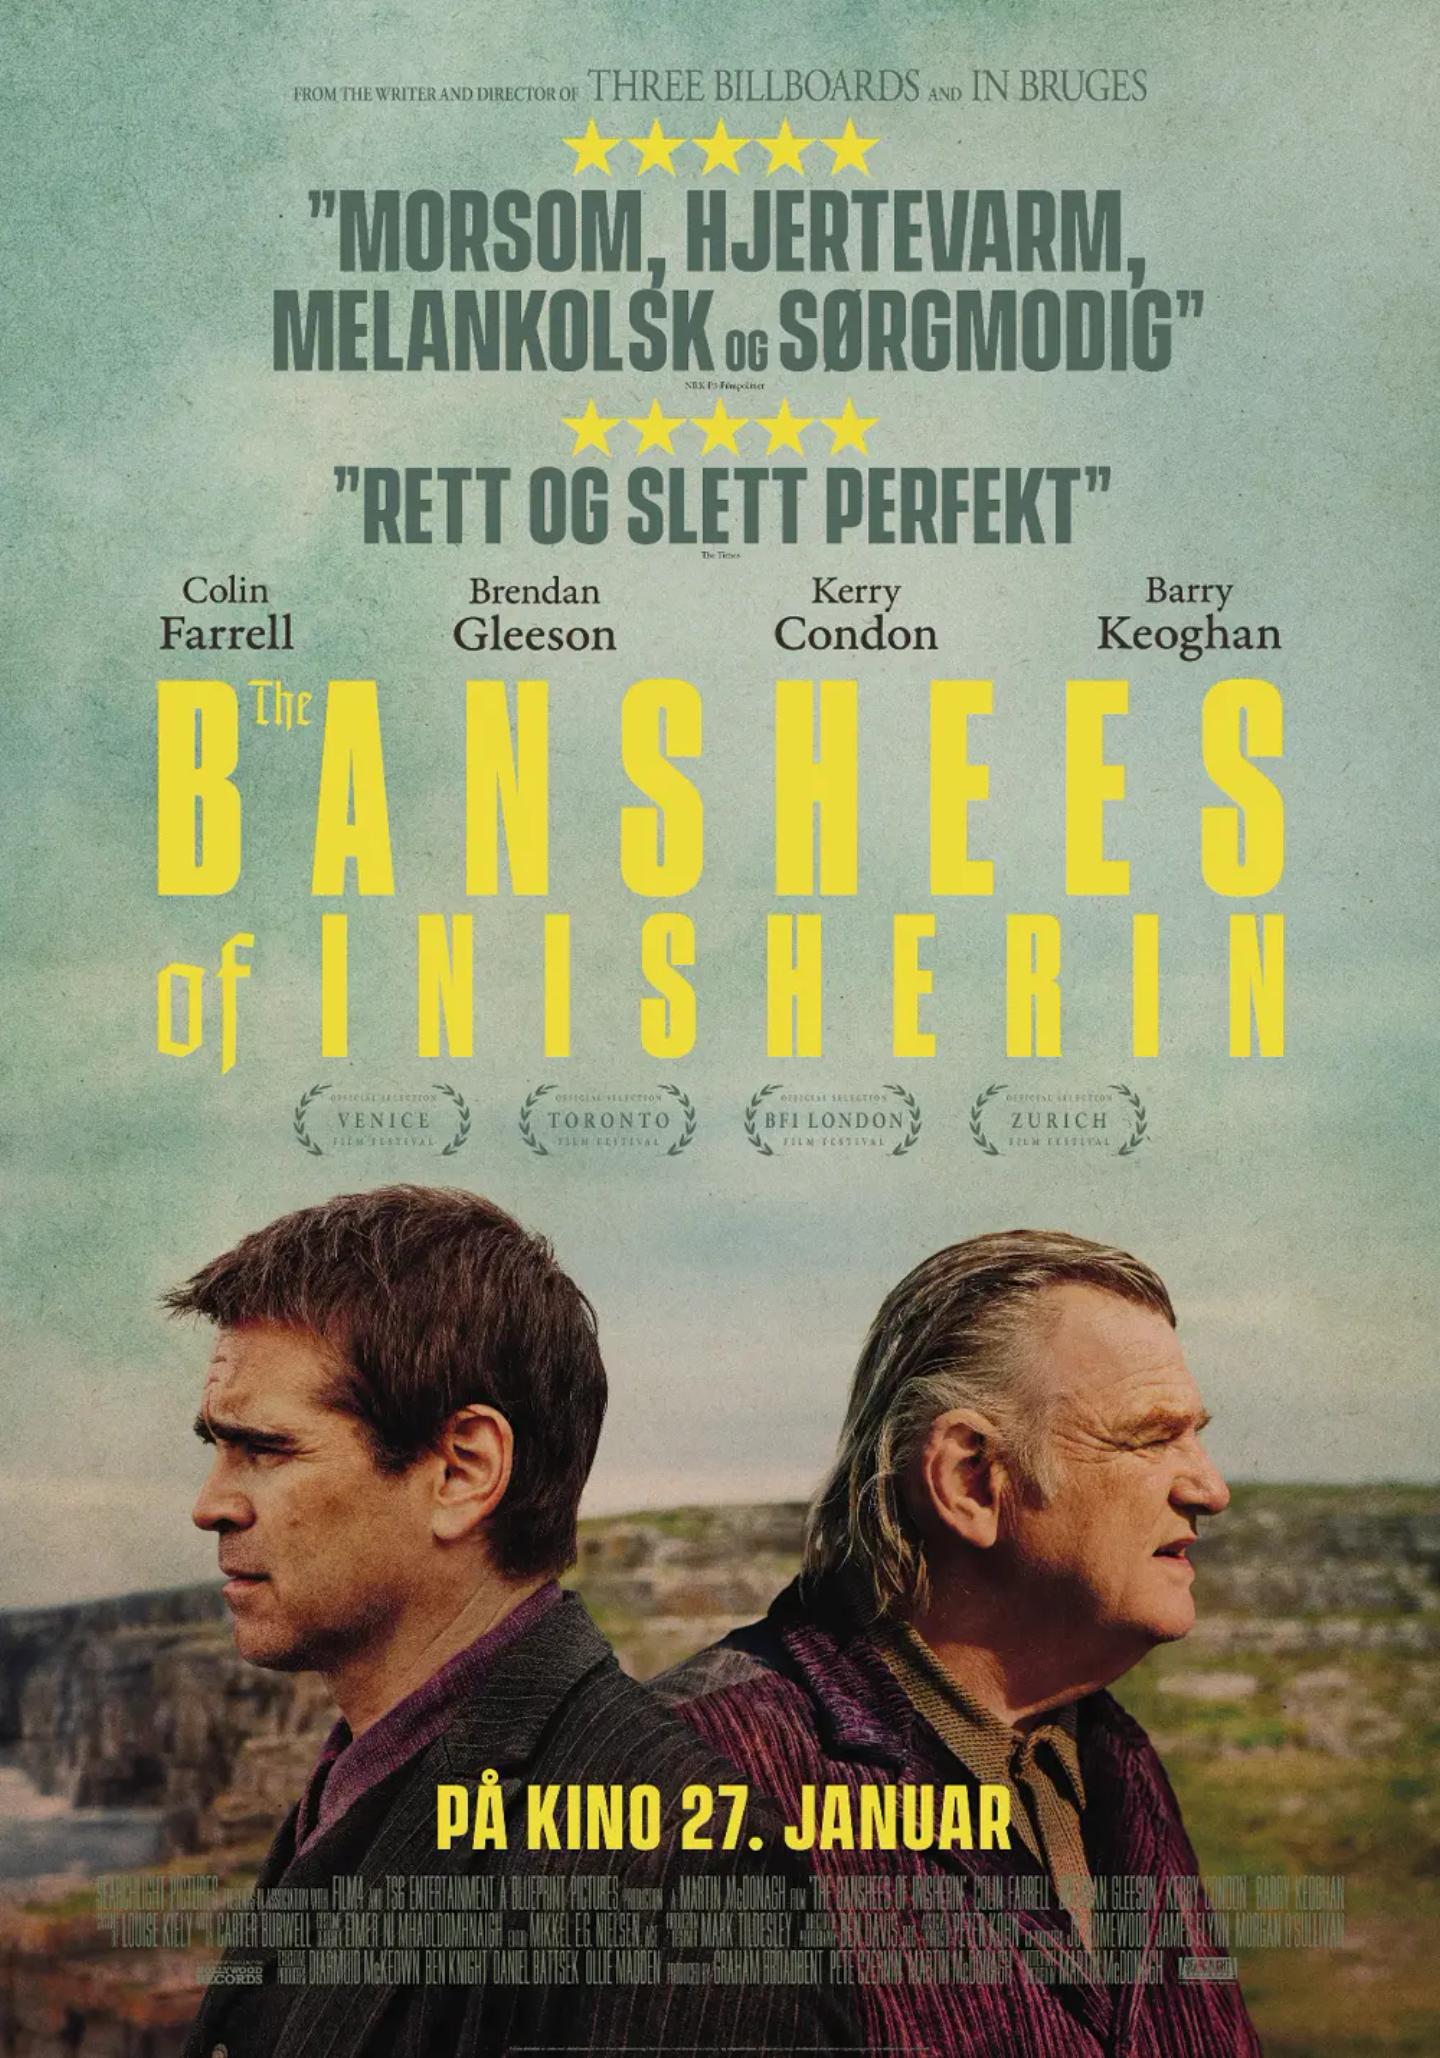 Plakat for 'The Banshees of Inisherin'